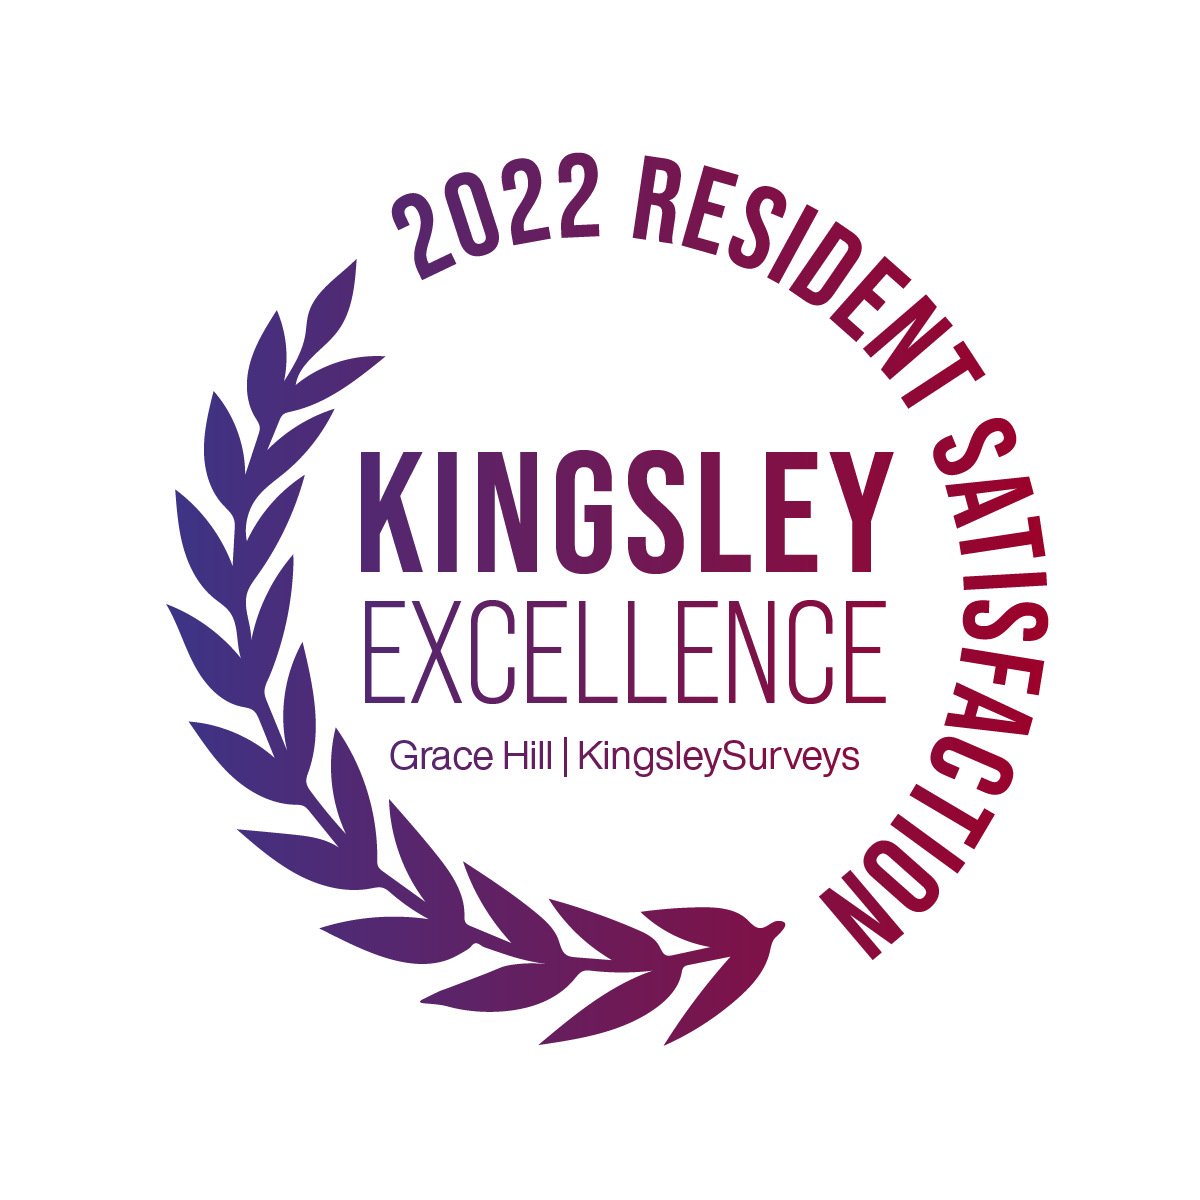  Kingsley Award